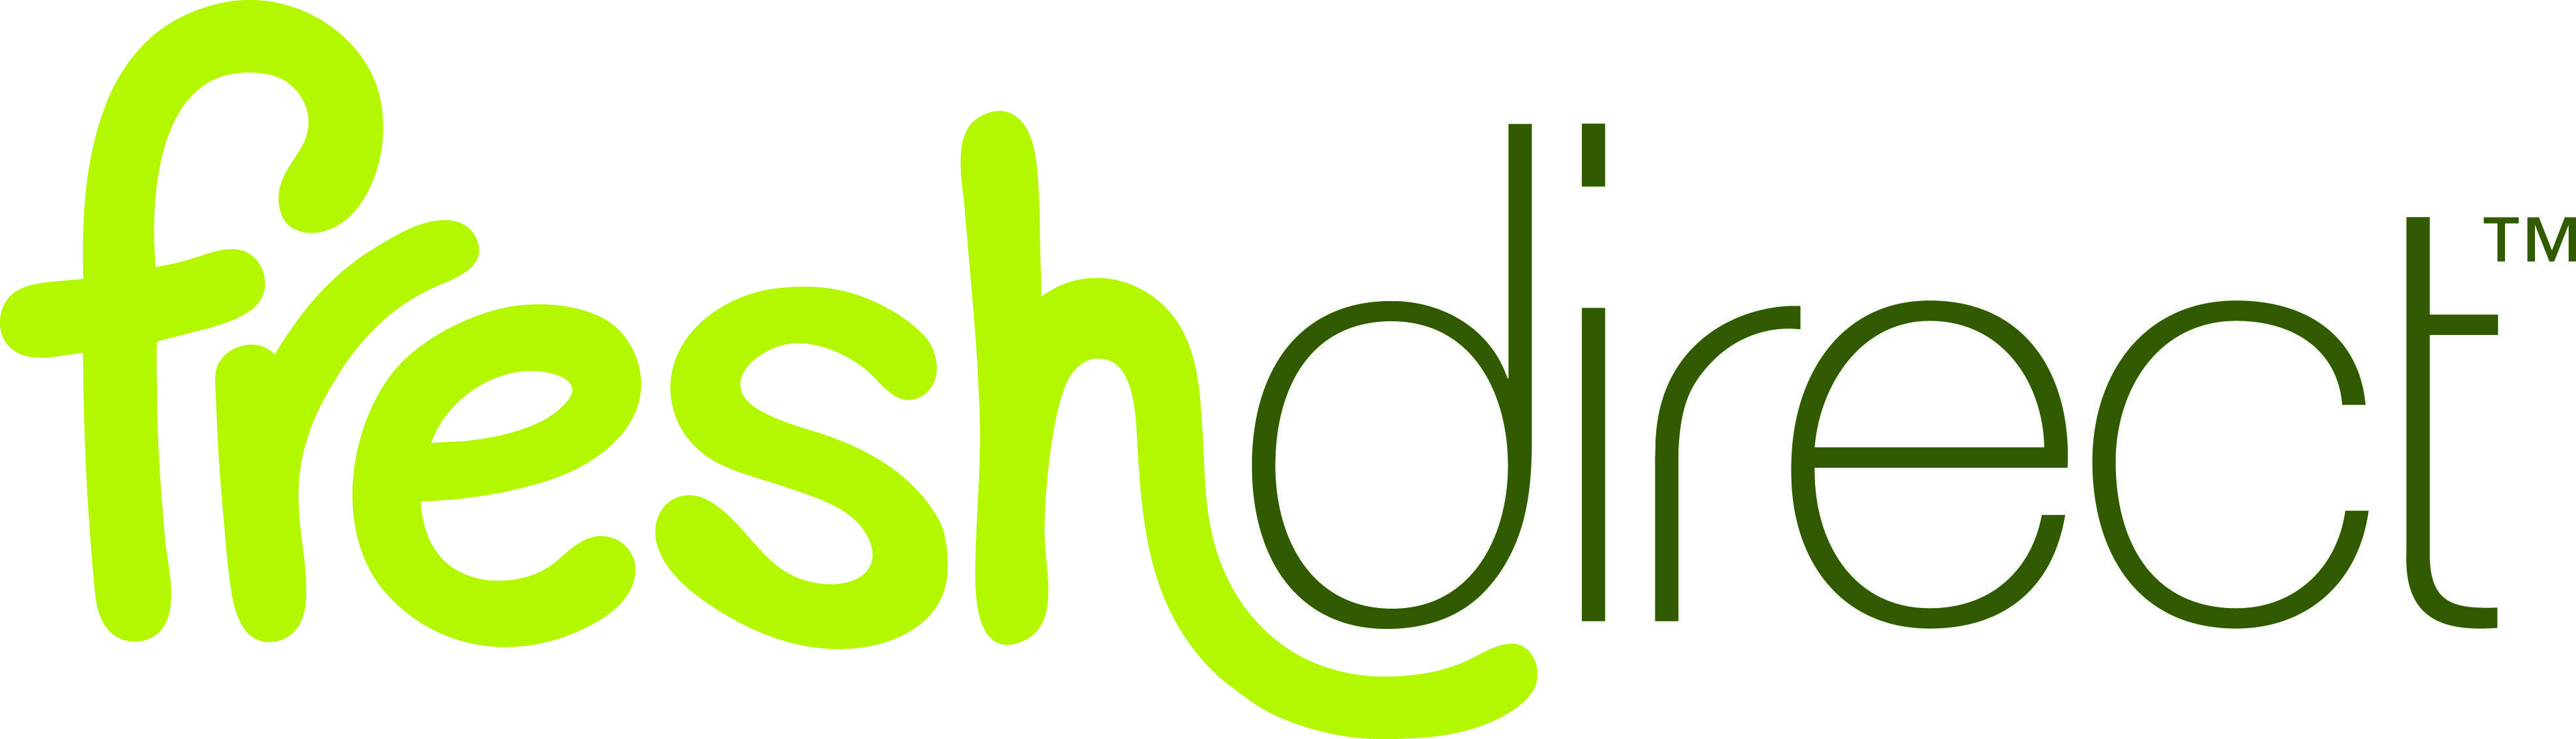 FreshDirect Logo - Fresh direct Logos